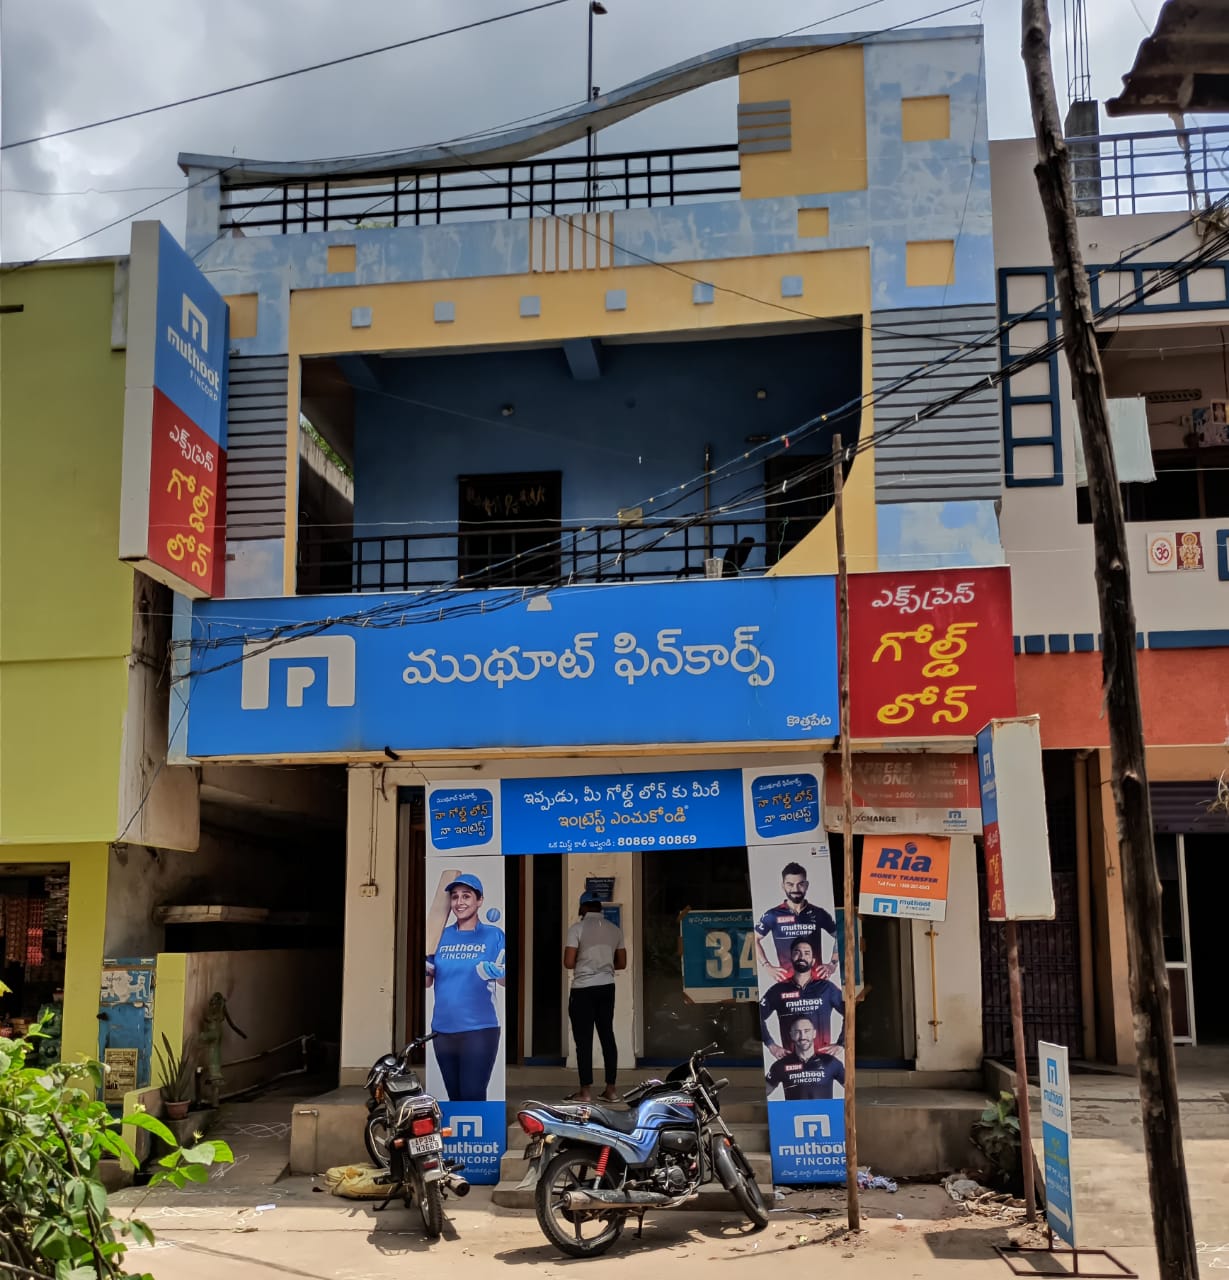 Muthoot Fincorp Gold Loan Services in Kothapeta, East Godavari, Andhra Pradesh